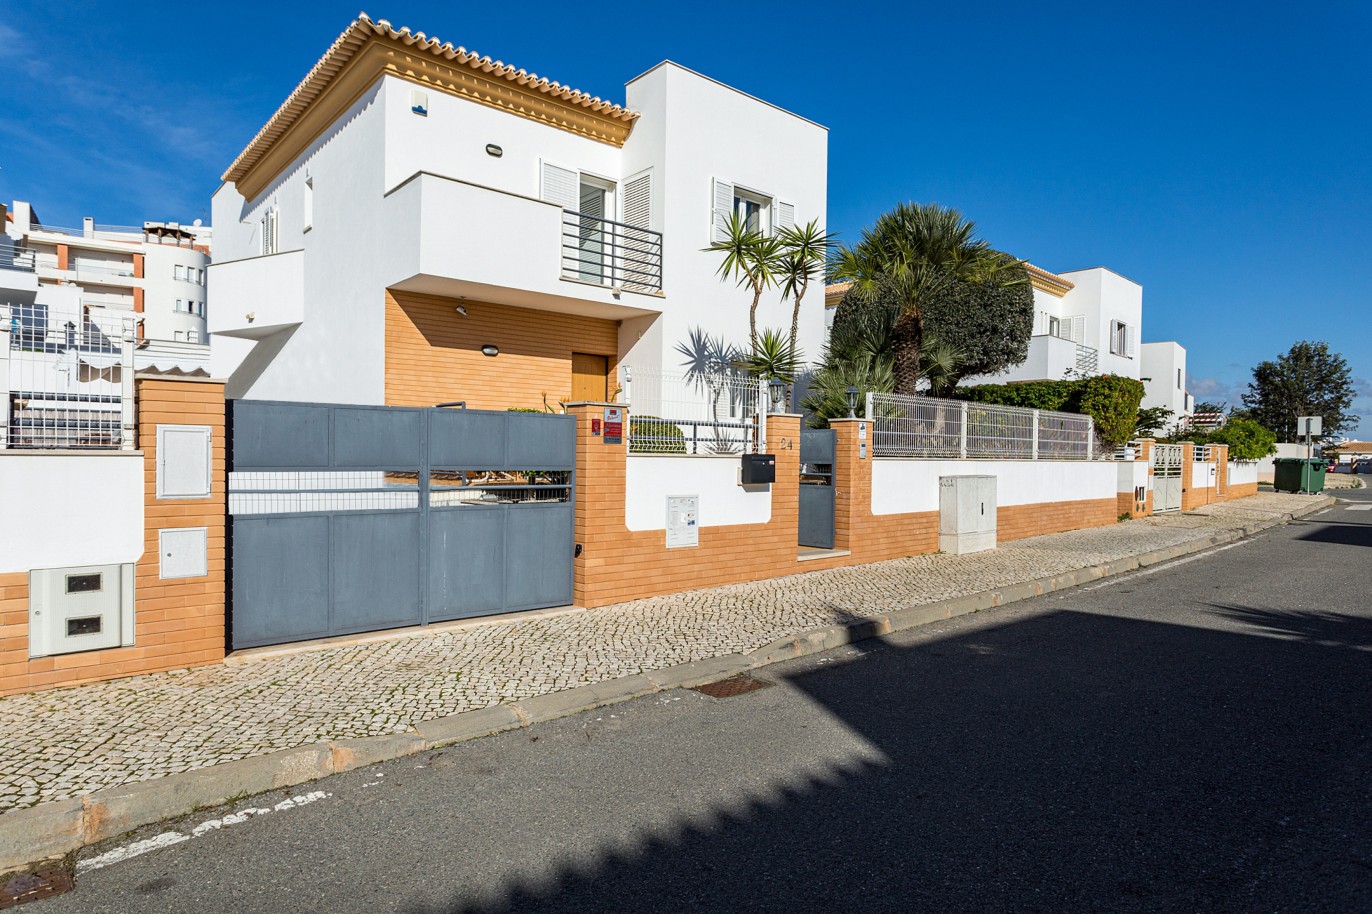 4 bedroom detached villa with pool for sale in Albufeira, Algarve_214352